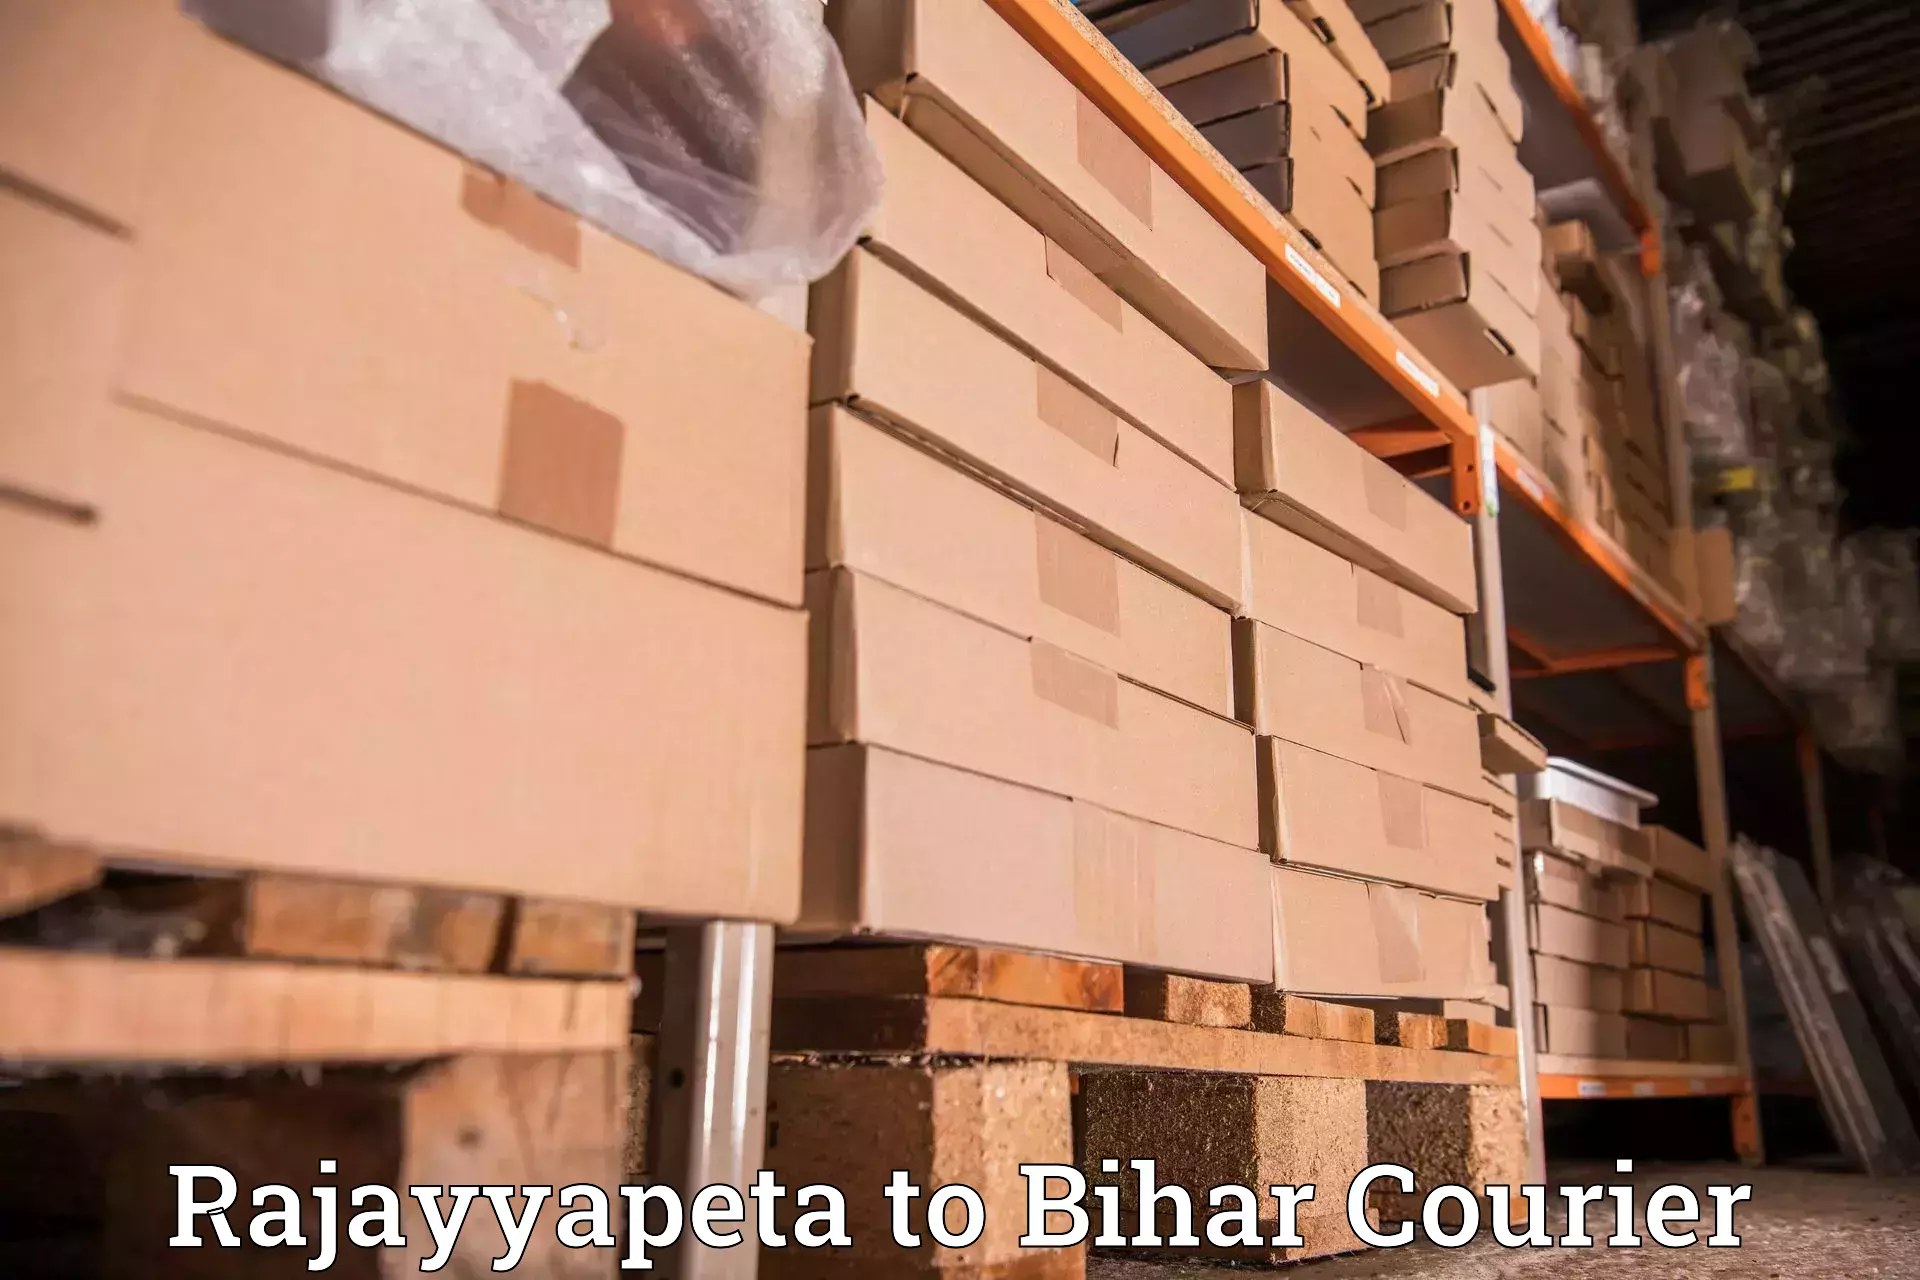 State-of-the-art courier technology Rajayyapeta to Bhorey